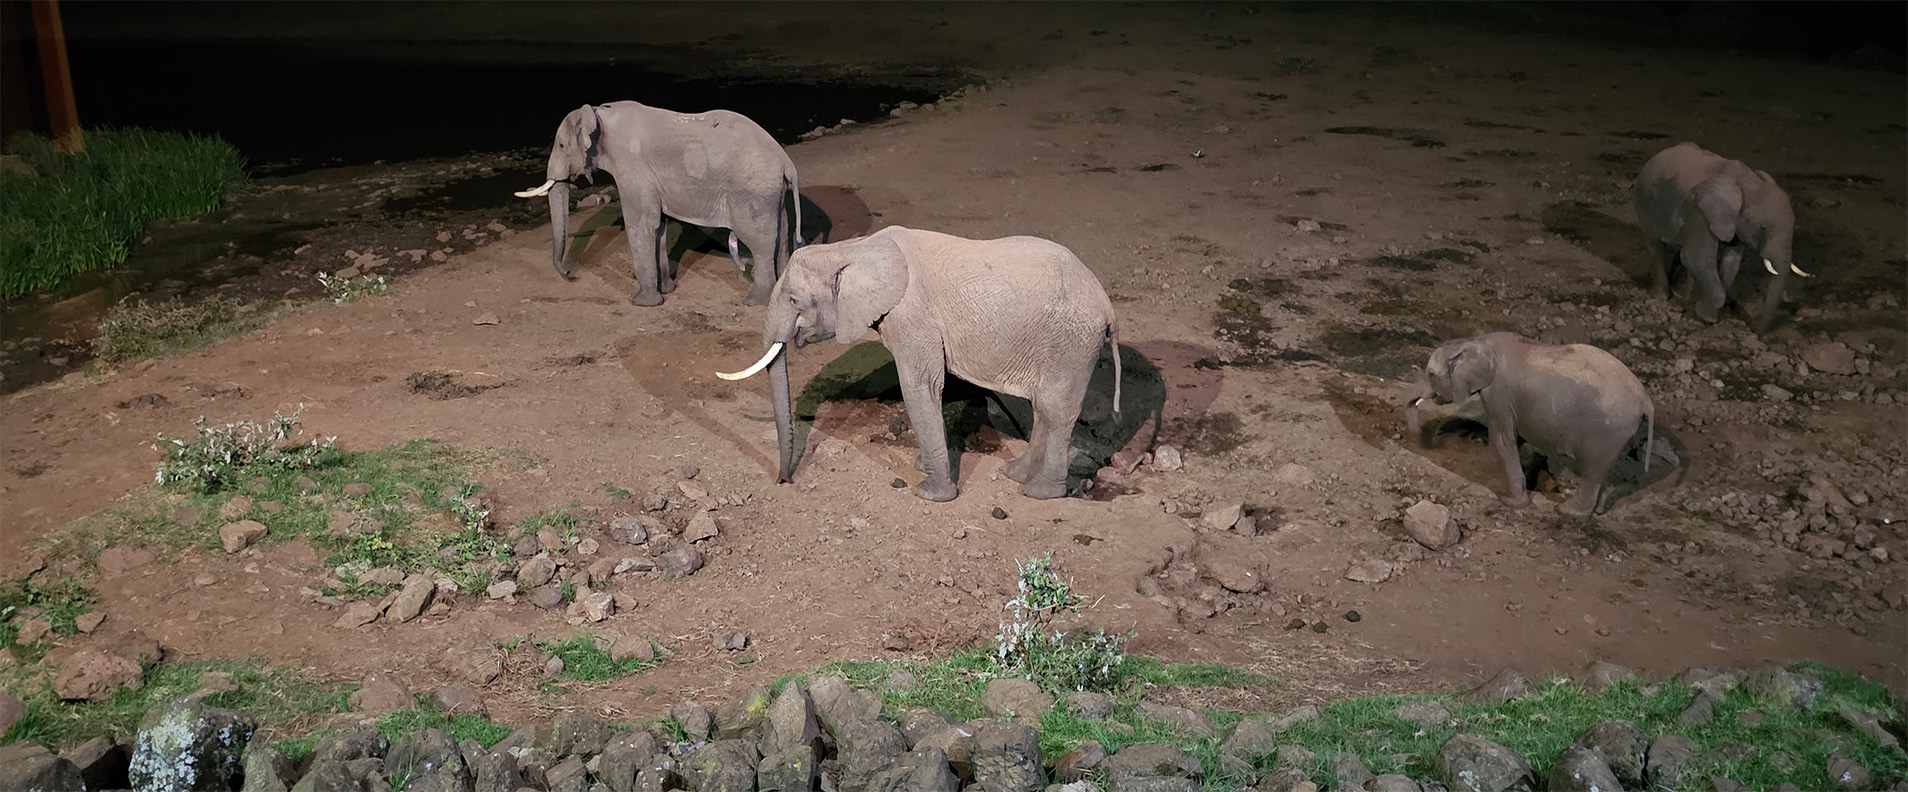 Elephants at water hole at night